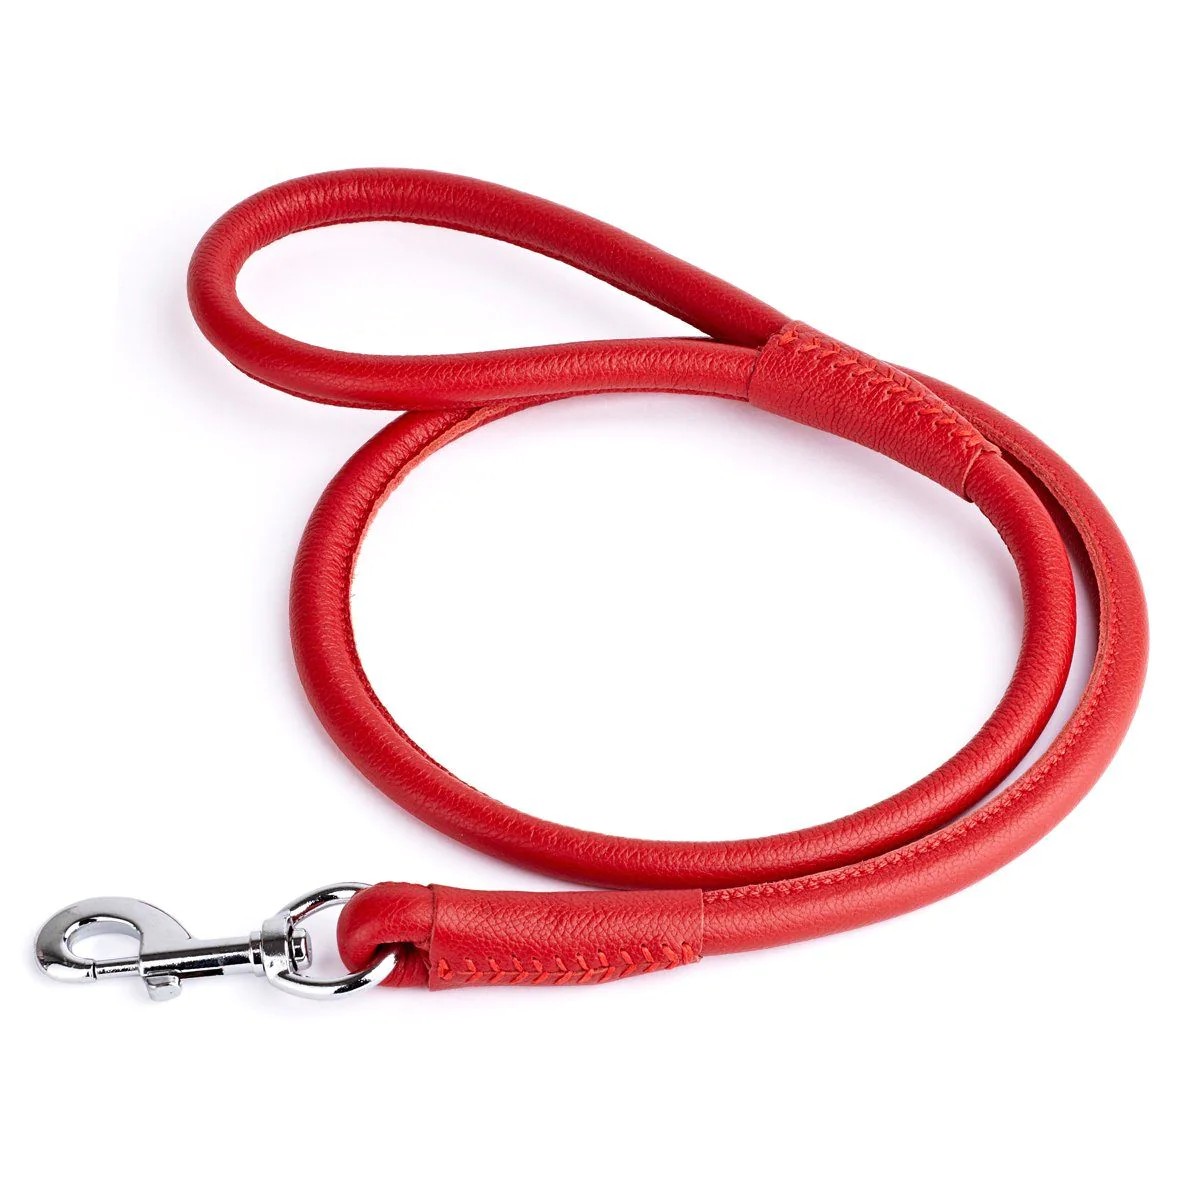 Dogline Soft Leather Round Dog Leash - Red